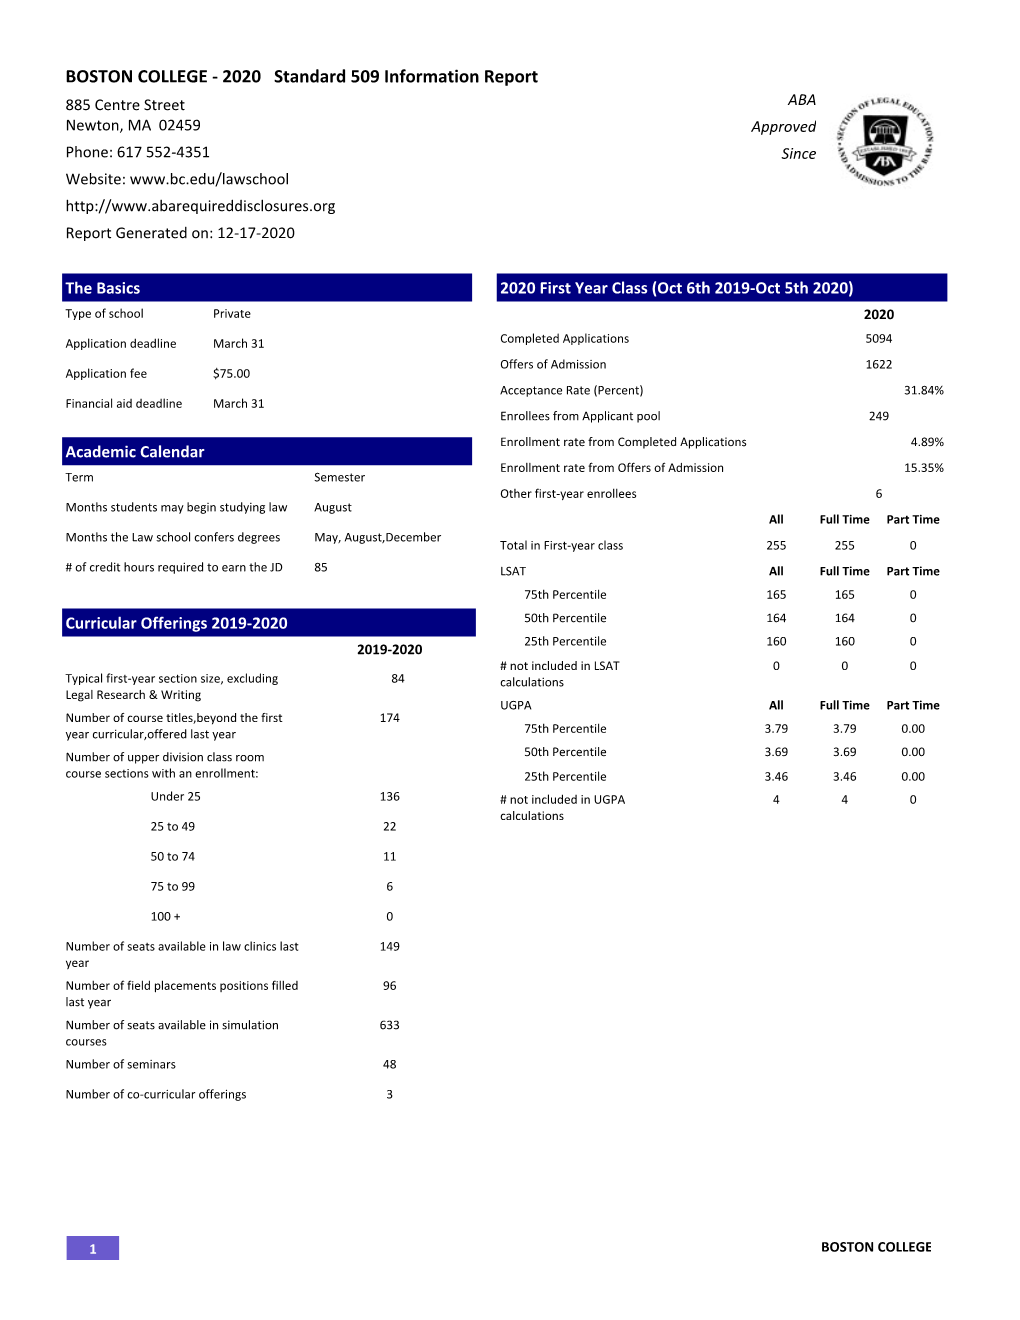 2020 Standard 509 Information Report